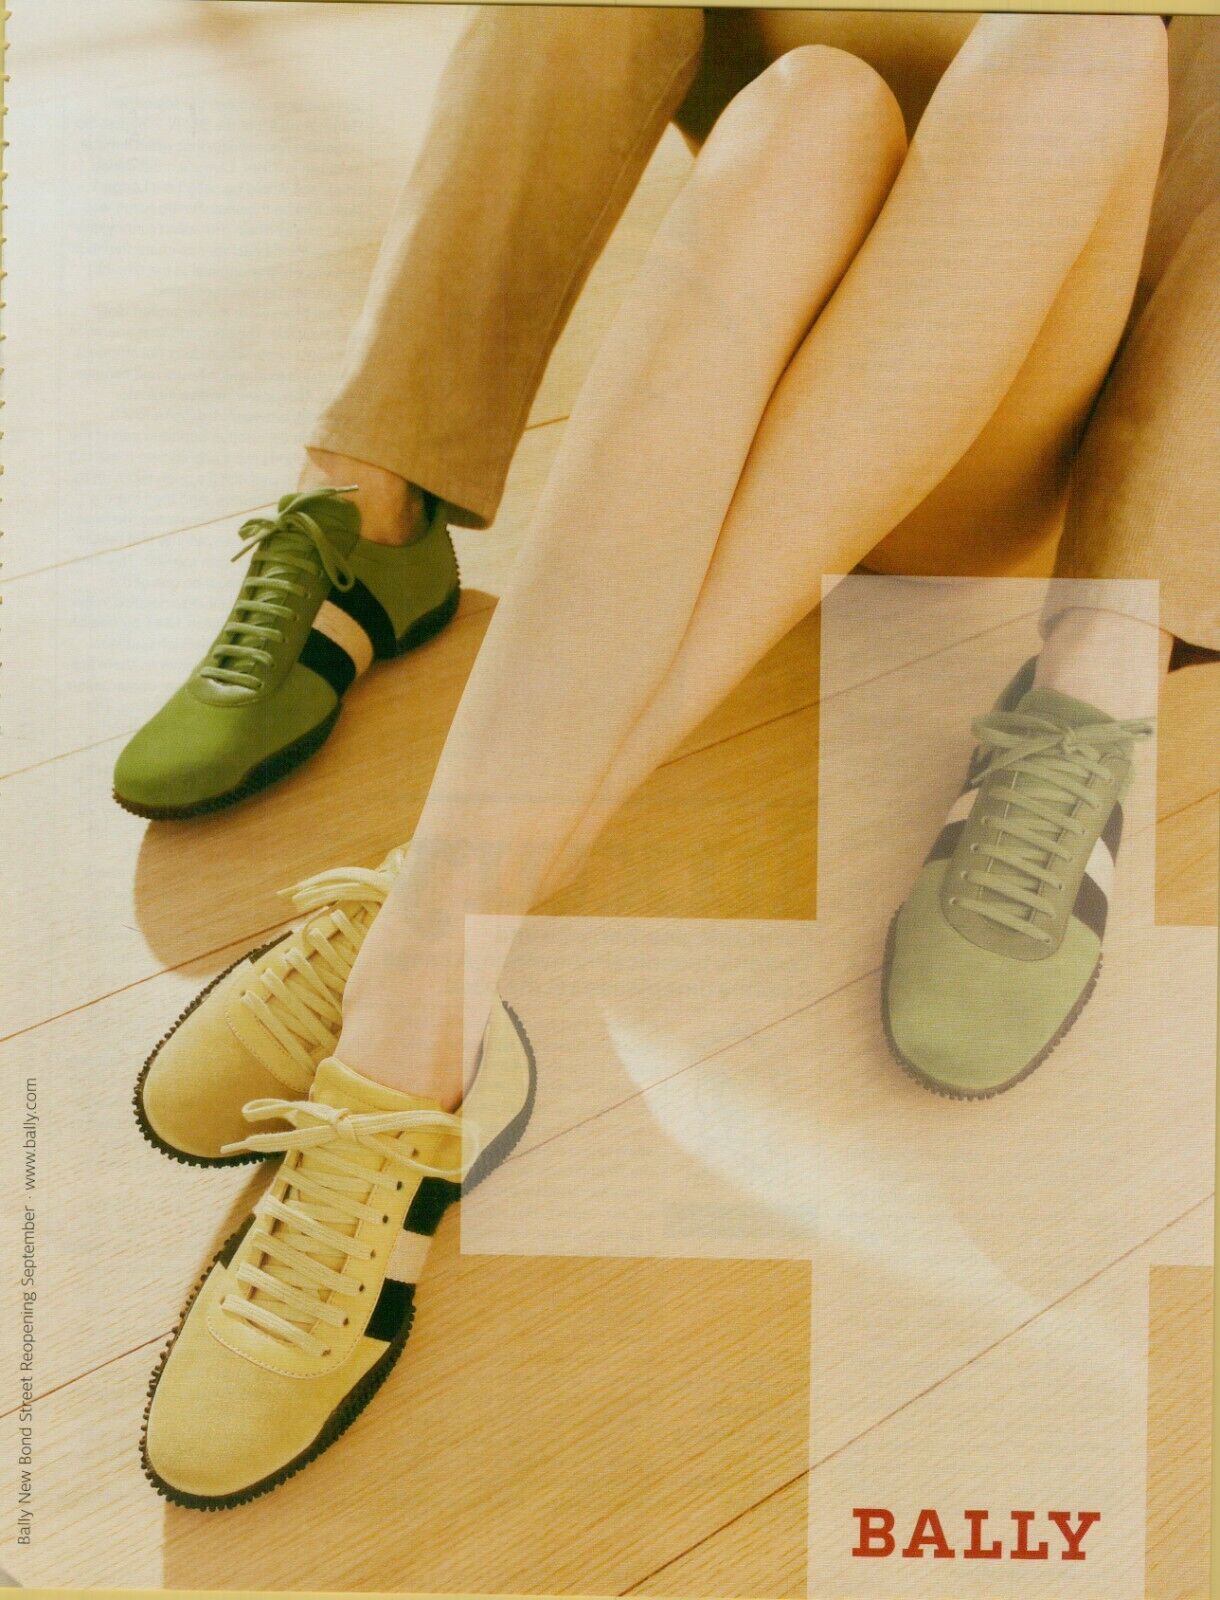 2004 Bally Sneakers Casual Shoes Stripes Men Women Fashion Vintage Print Ad